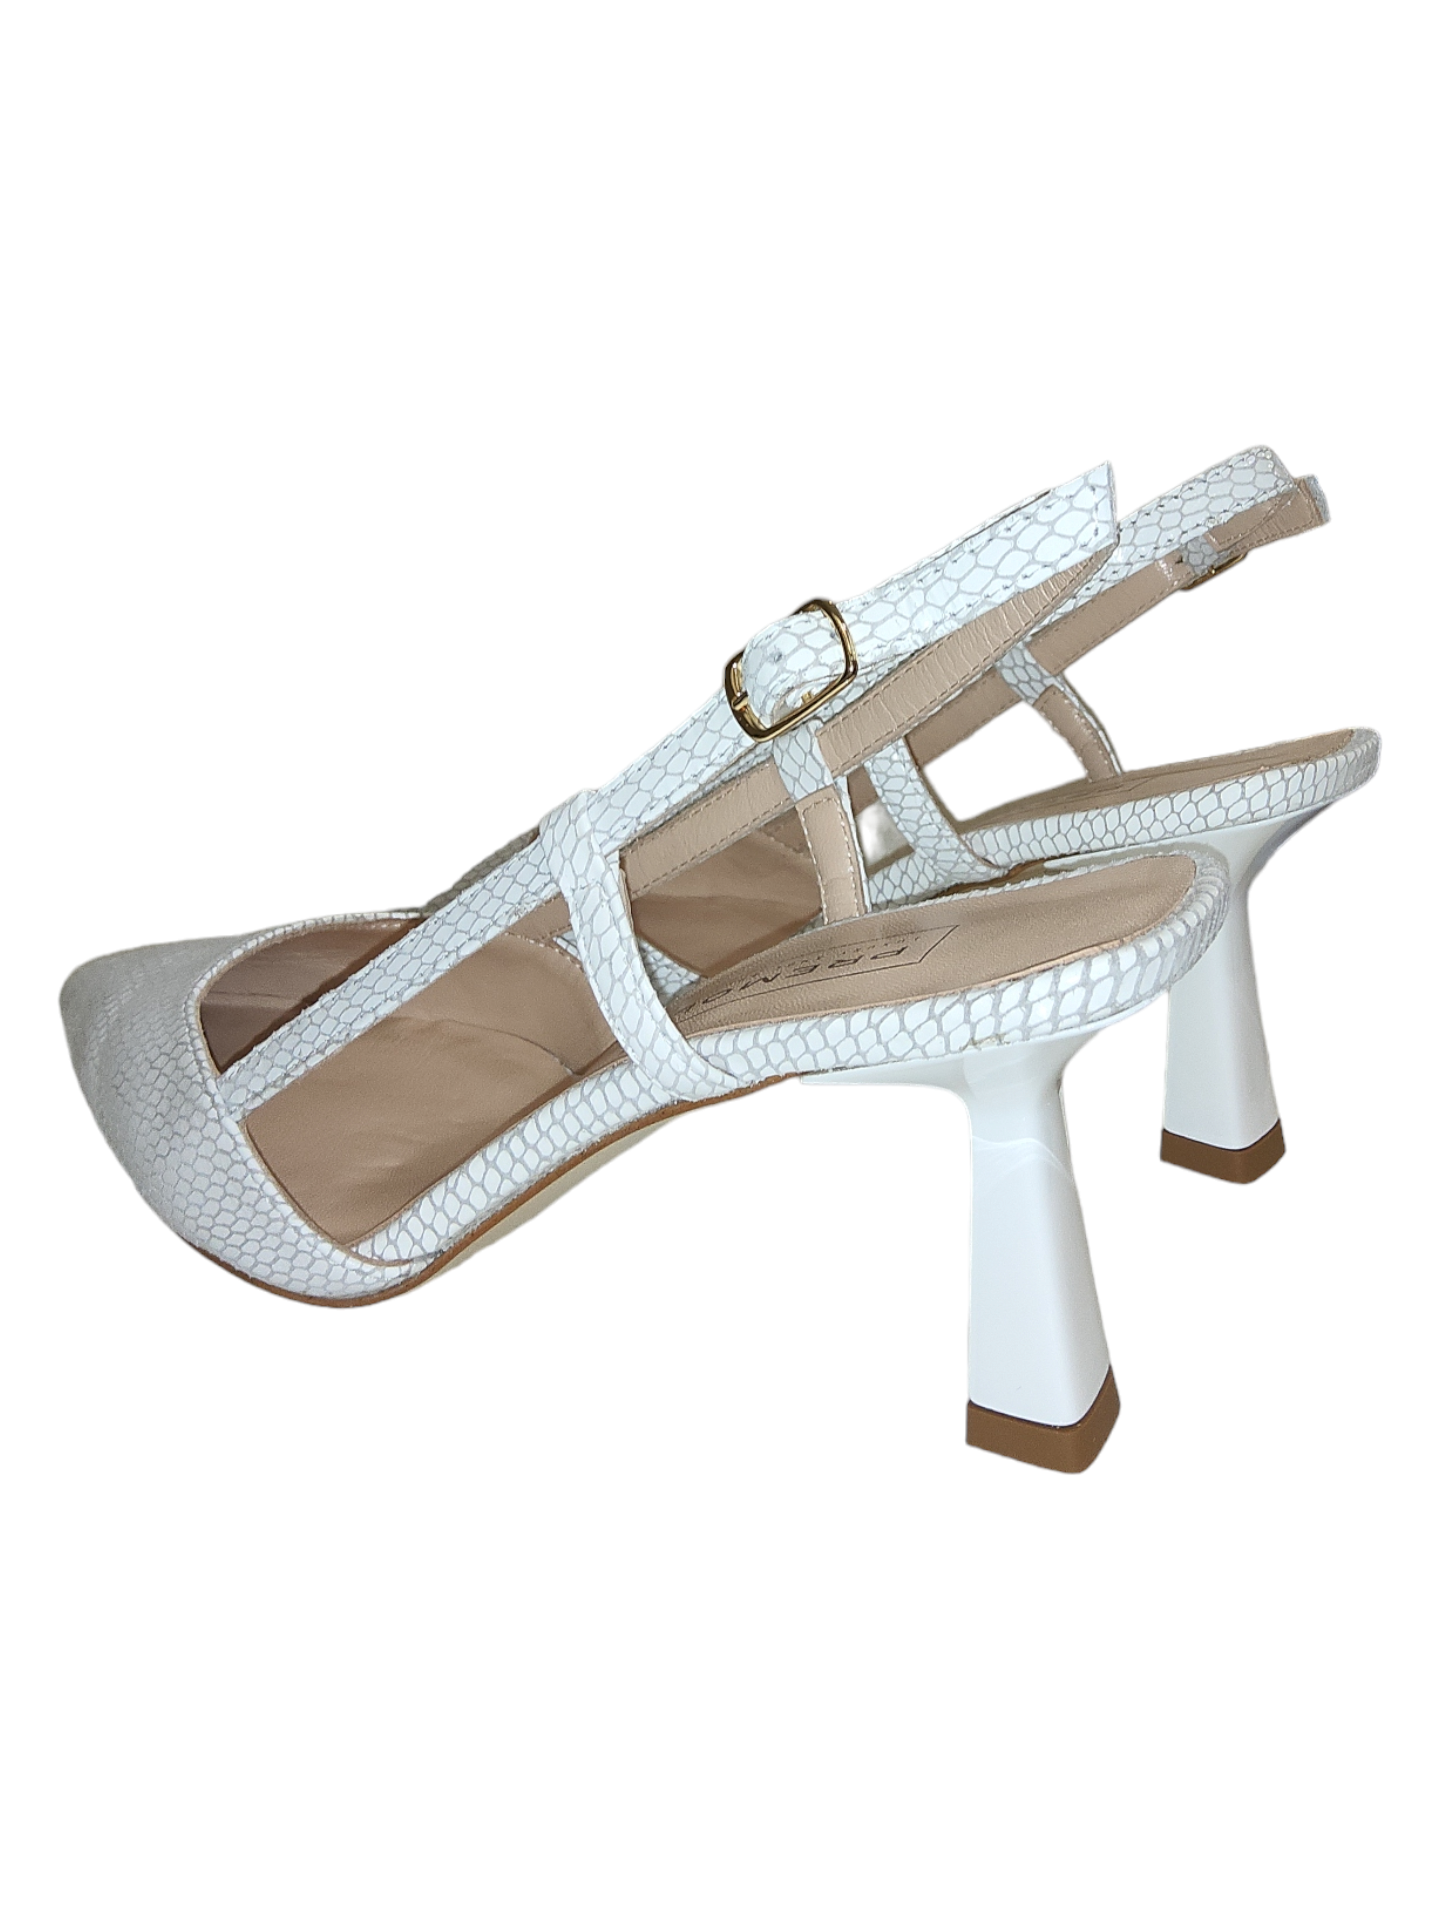 White leather slingback heel